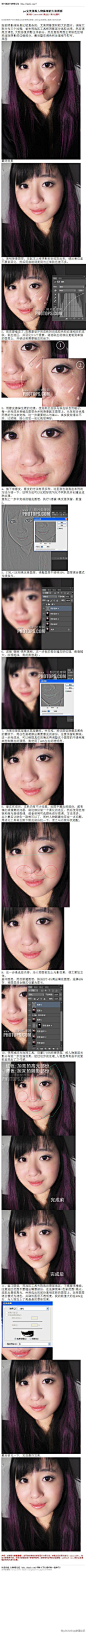 PS达人 - 揭秘几种人像后期photoshop磨皮方法 - QQ邮箱